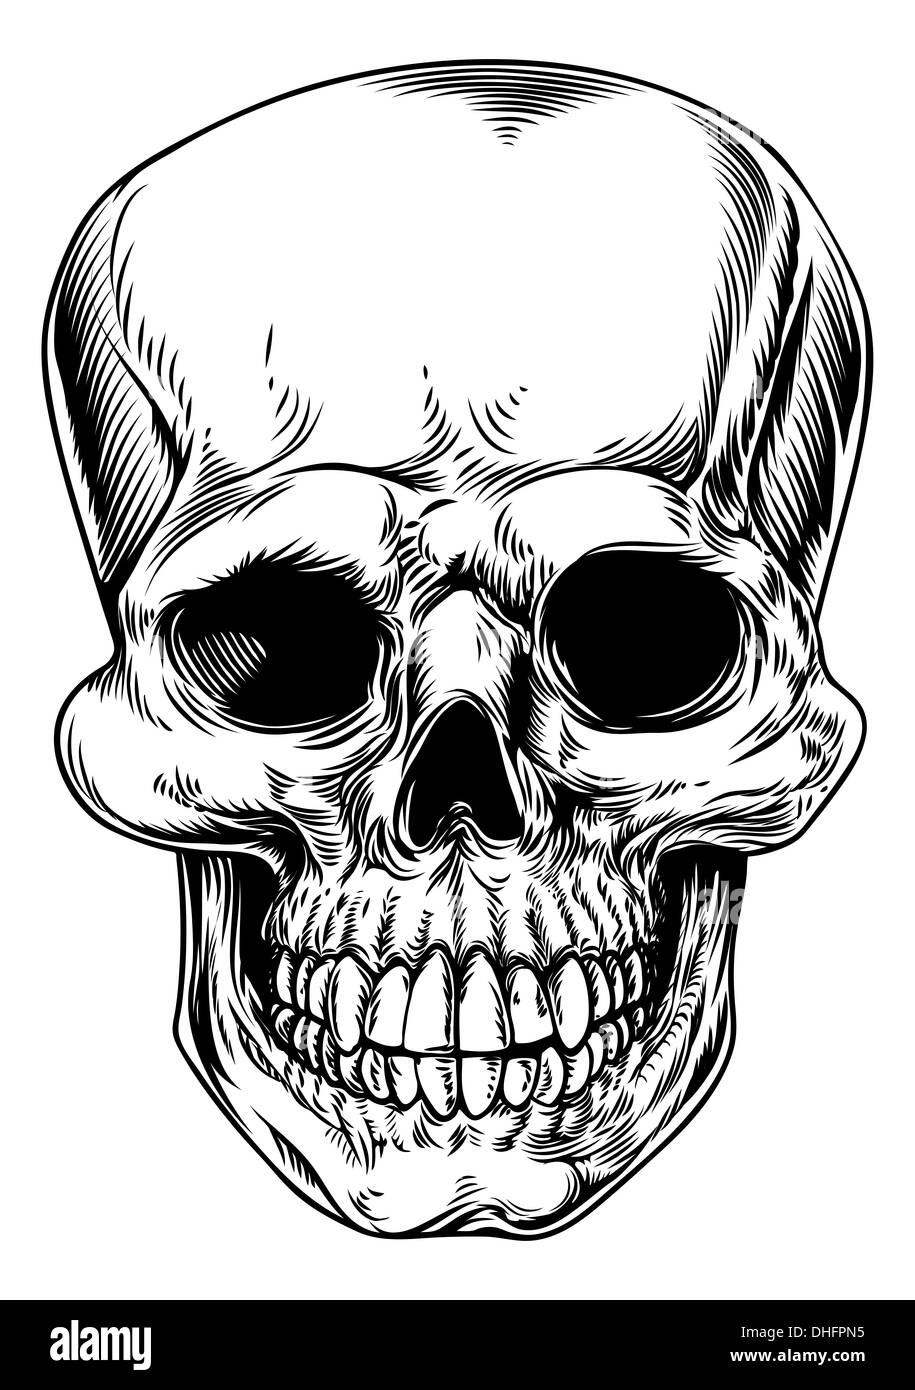 A vintage human skull or grim reaper deaths head illustration Stock Photo